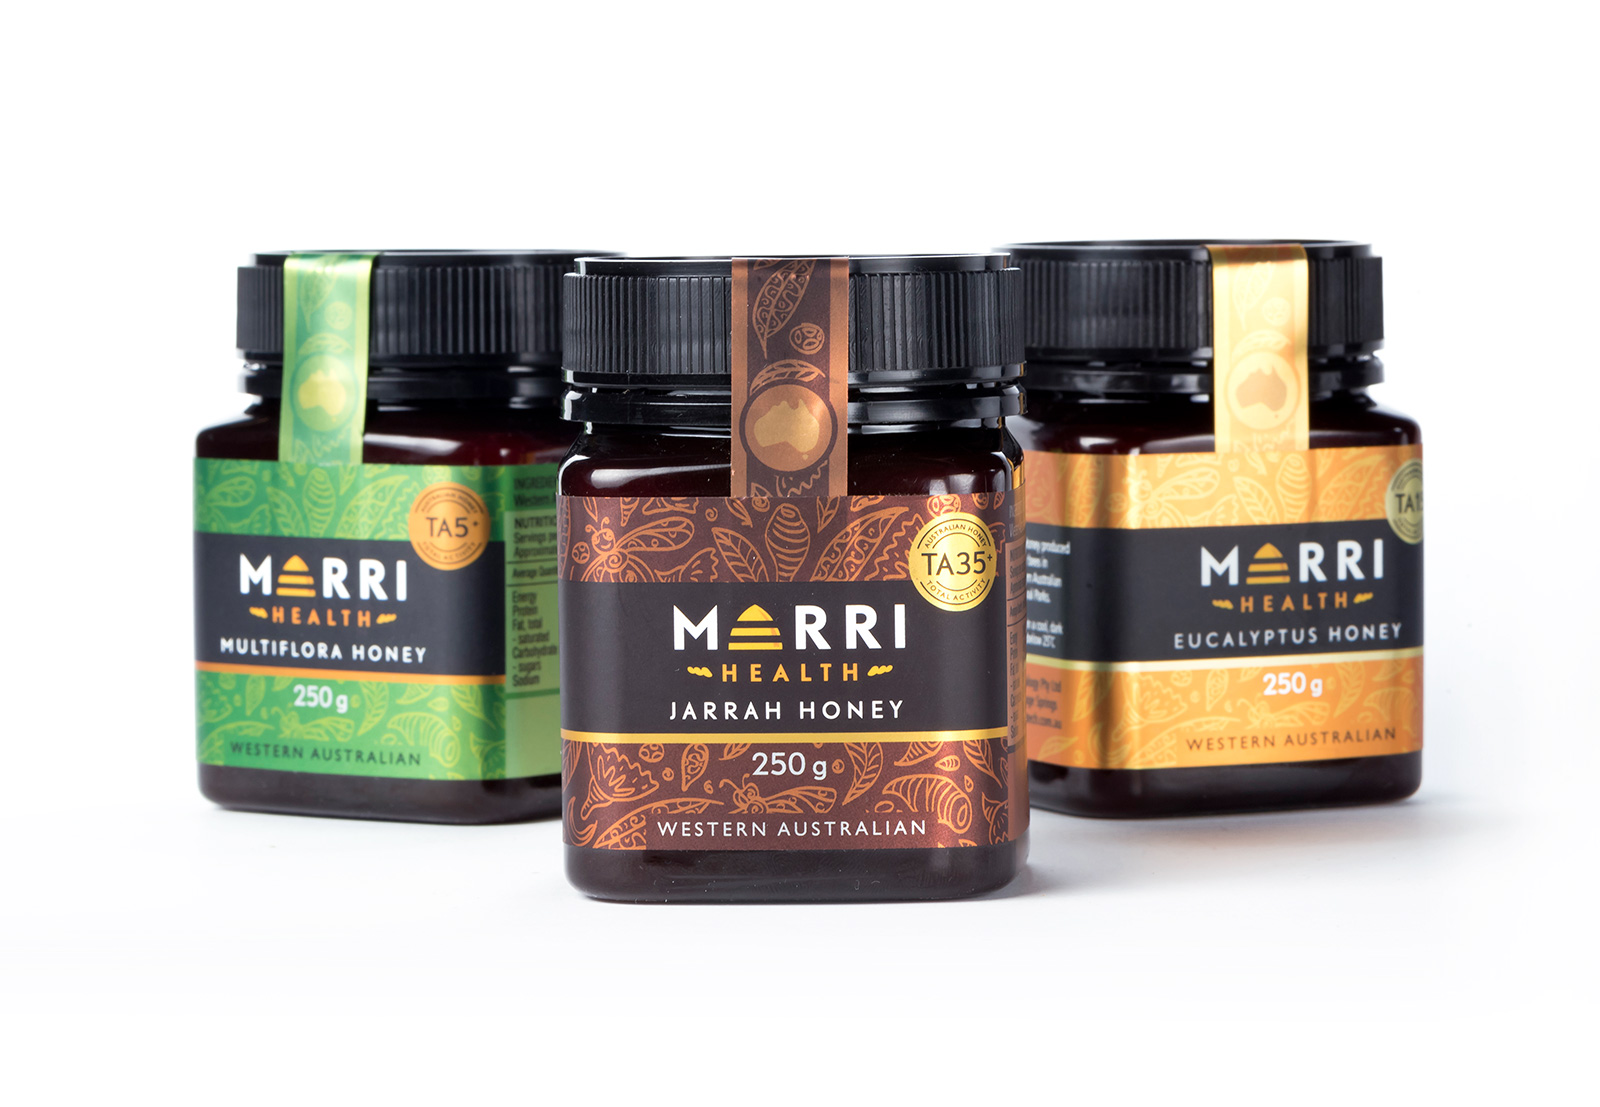 Thurlby Herb Farm moisturizing bar packaging design